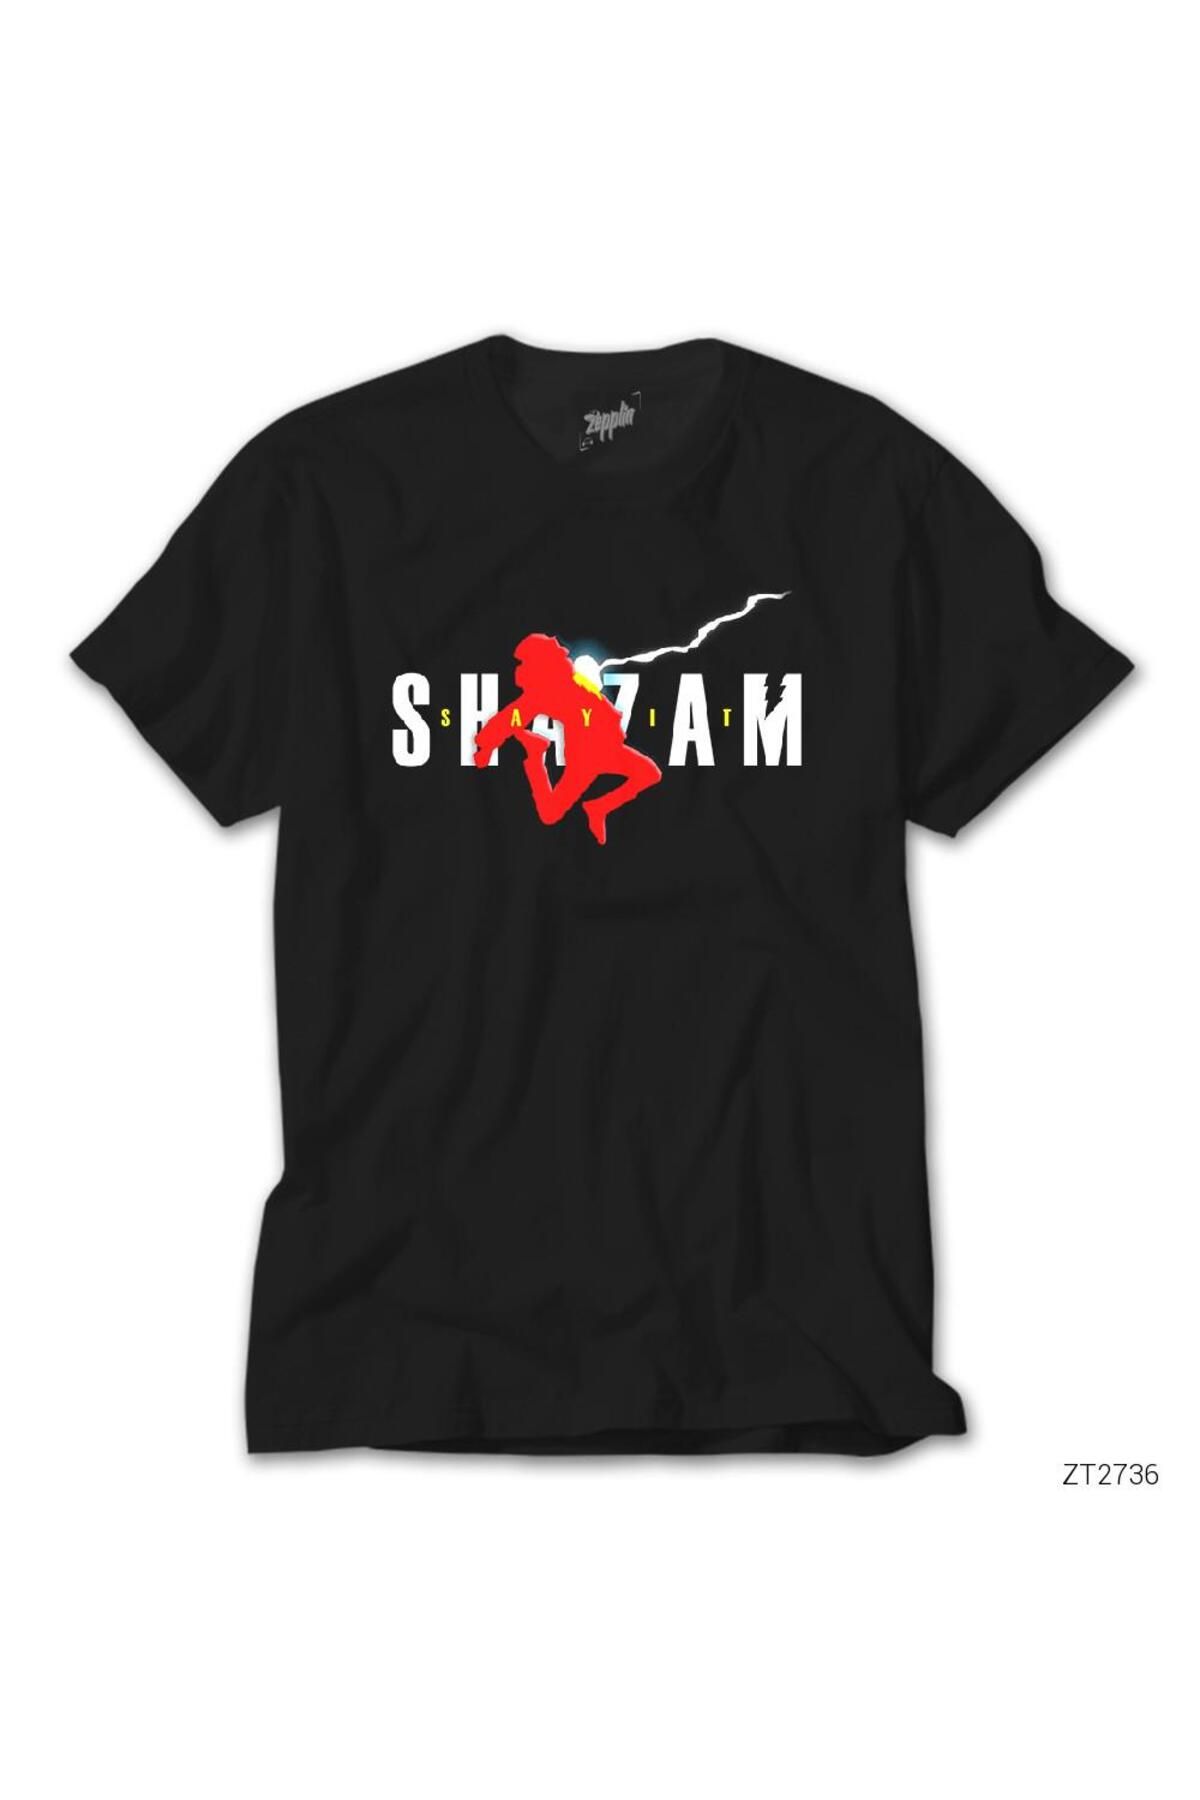 Karadeniz Shazam Logo and Child Siyah Tişört